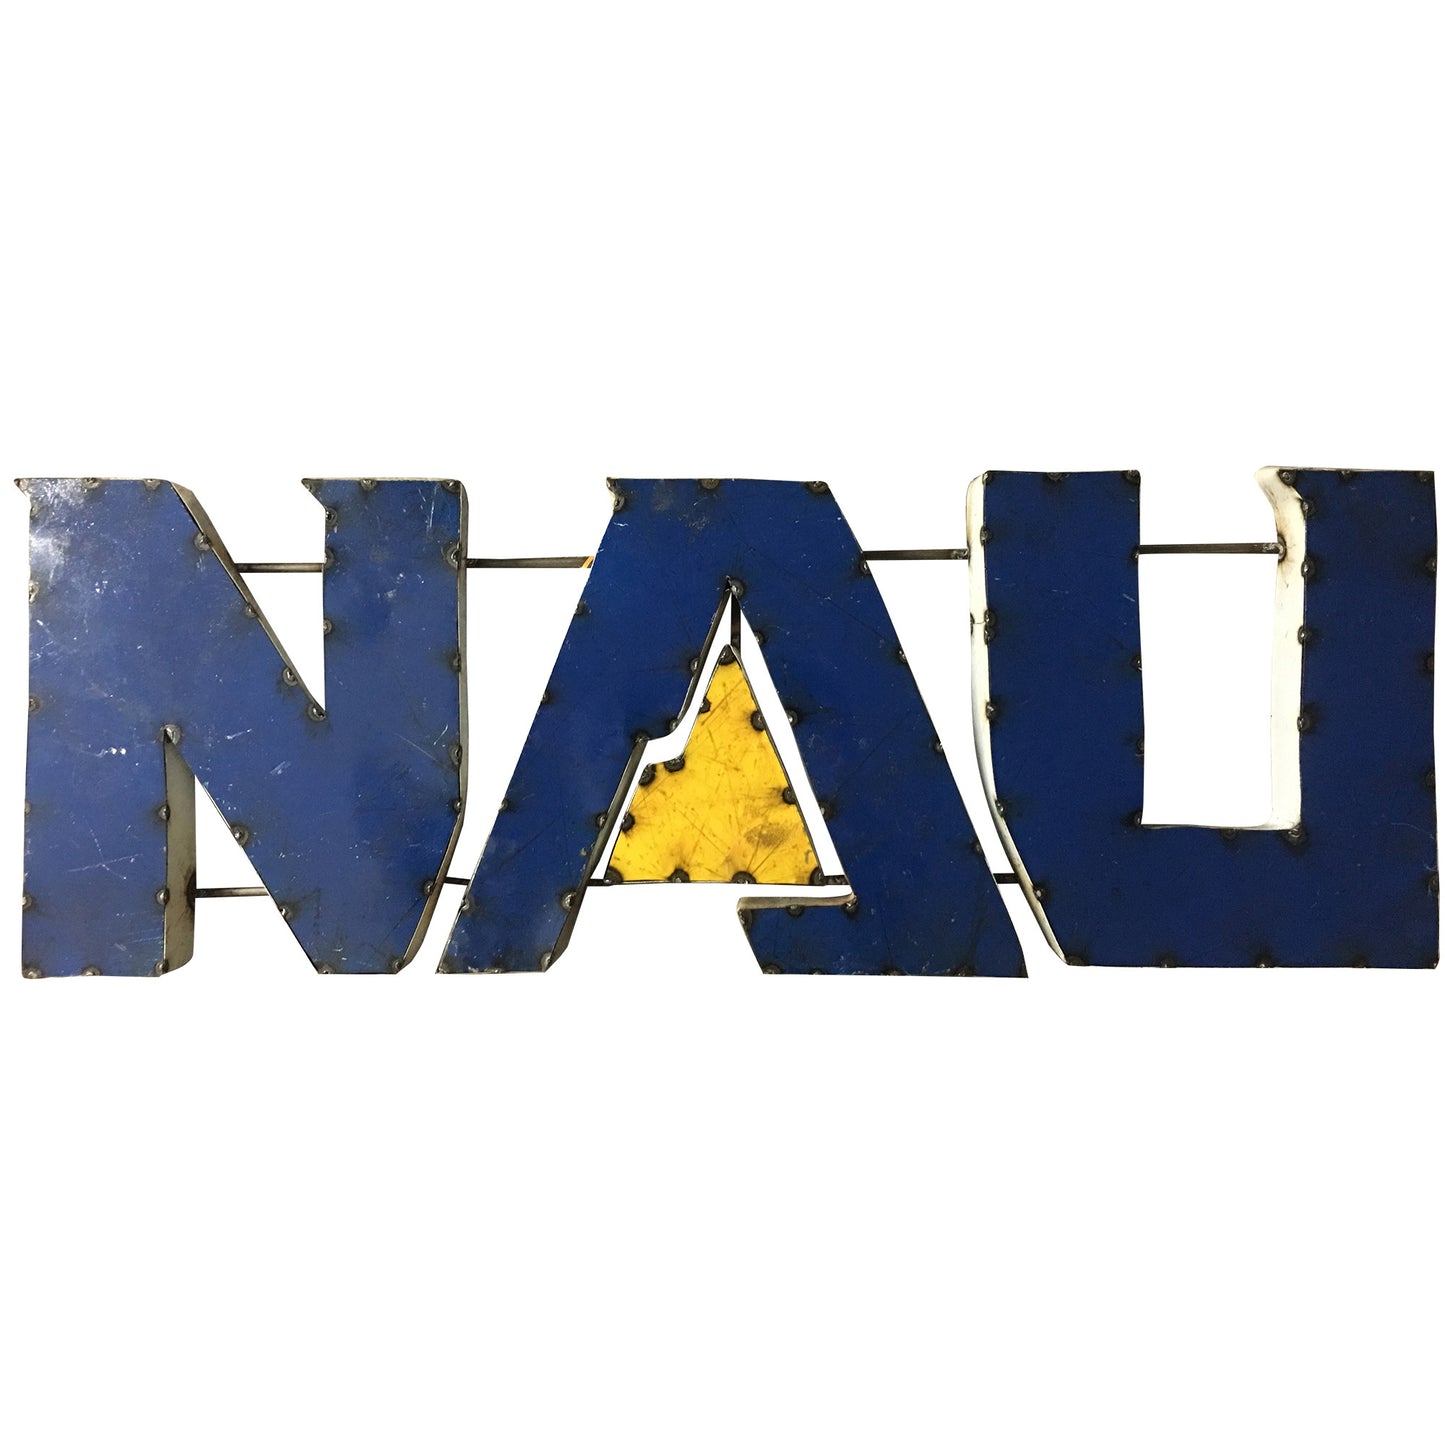 Northern Arizona University "NAU" Recycled Metal Wall Decor